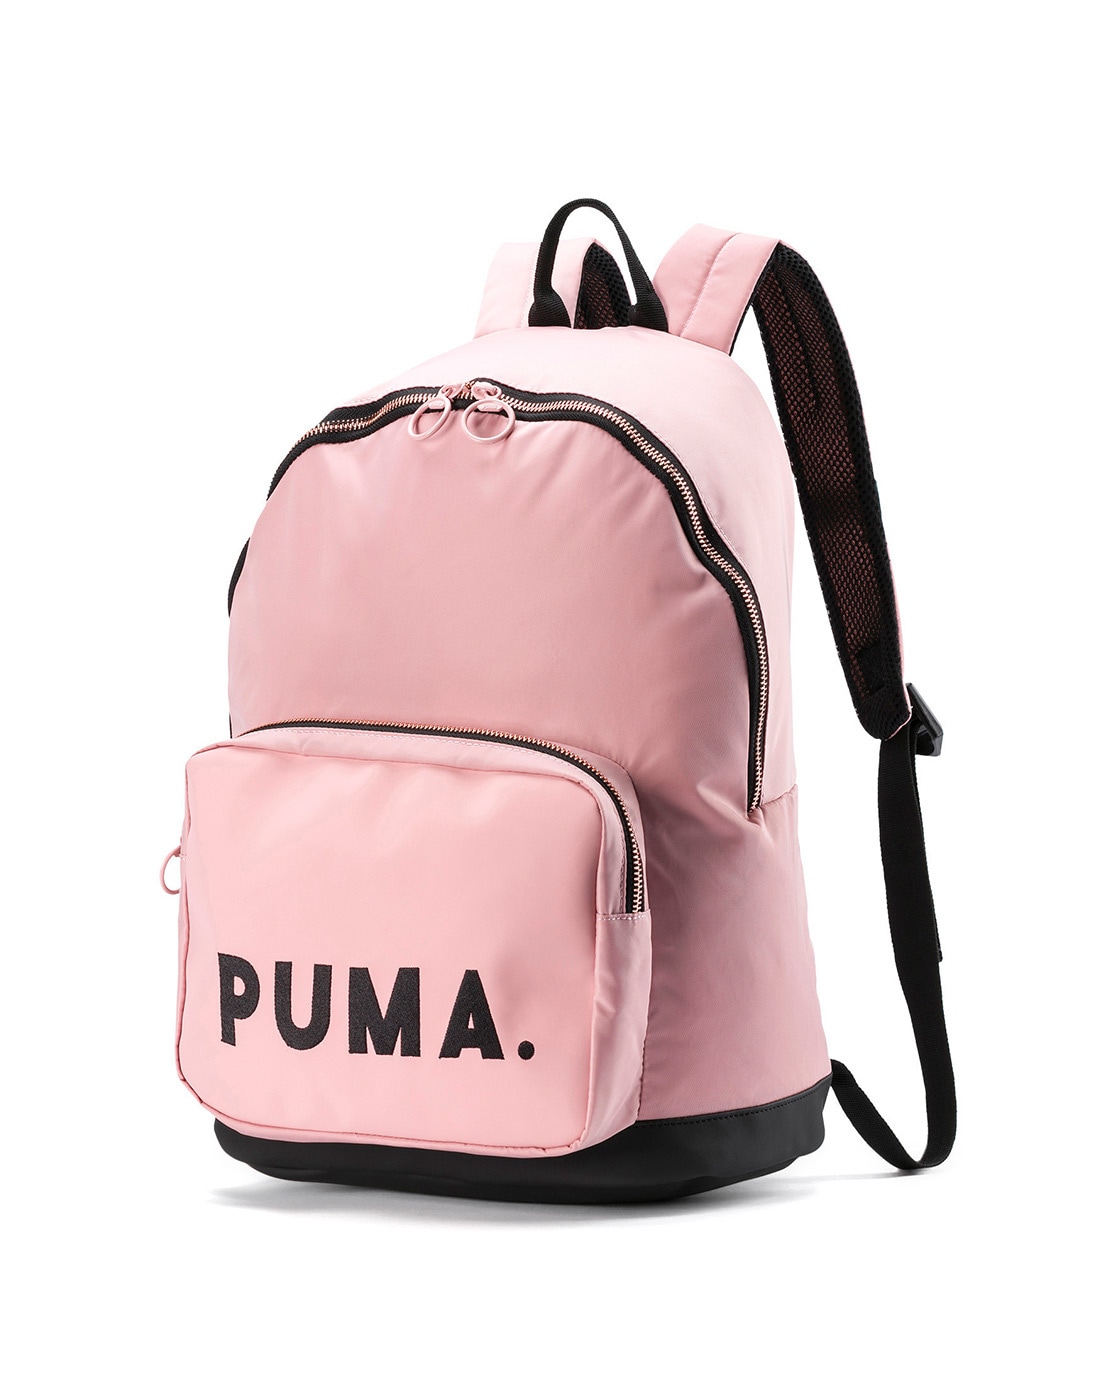 original puma backpack